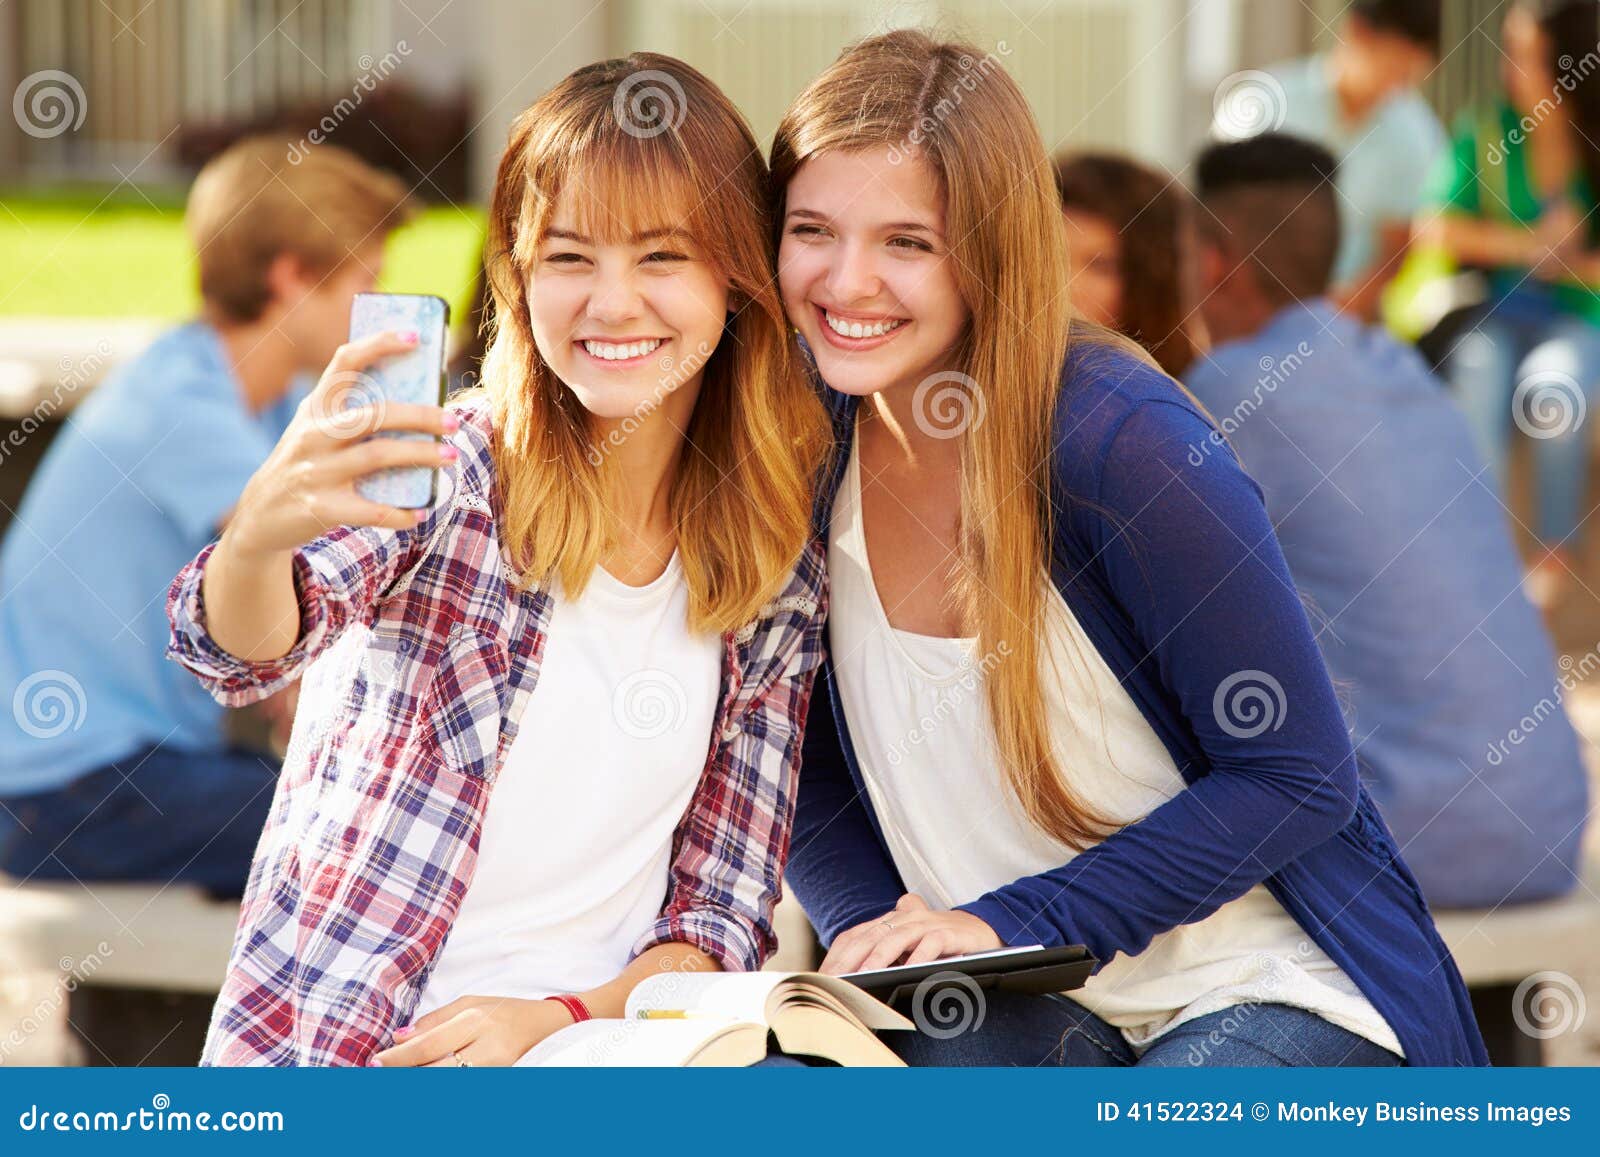 high school teen selfies